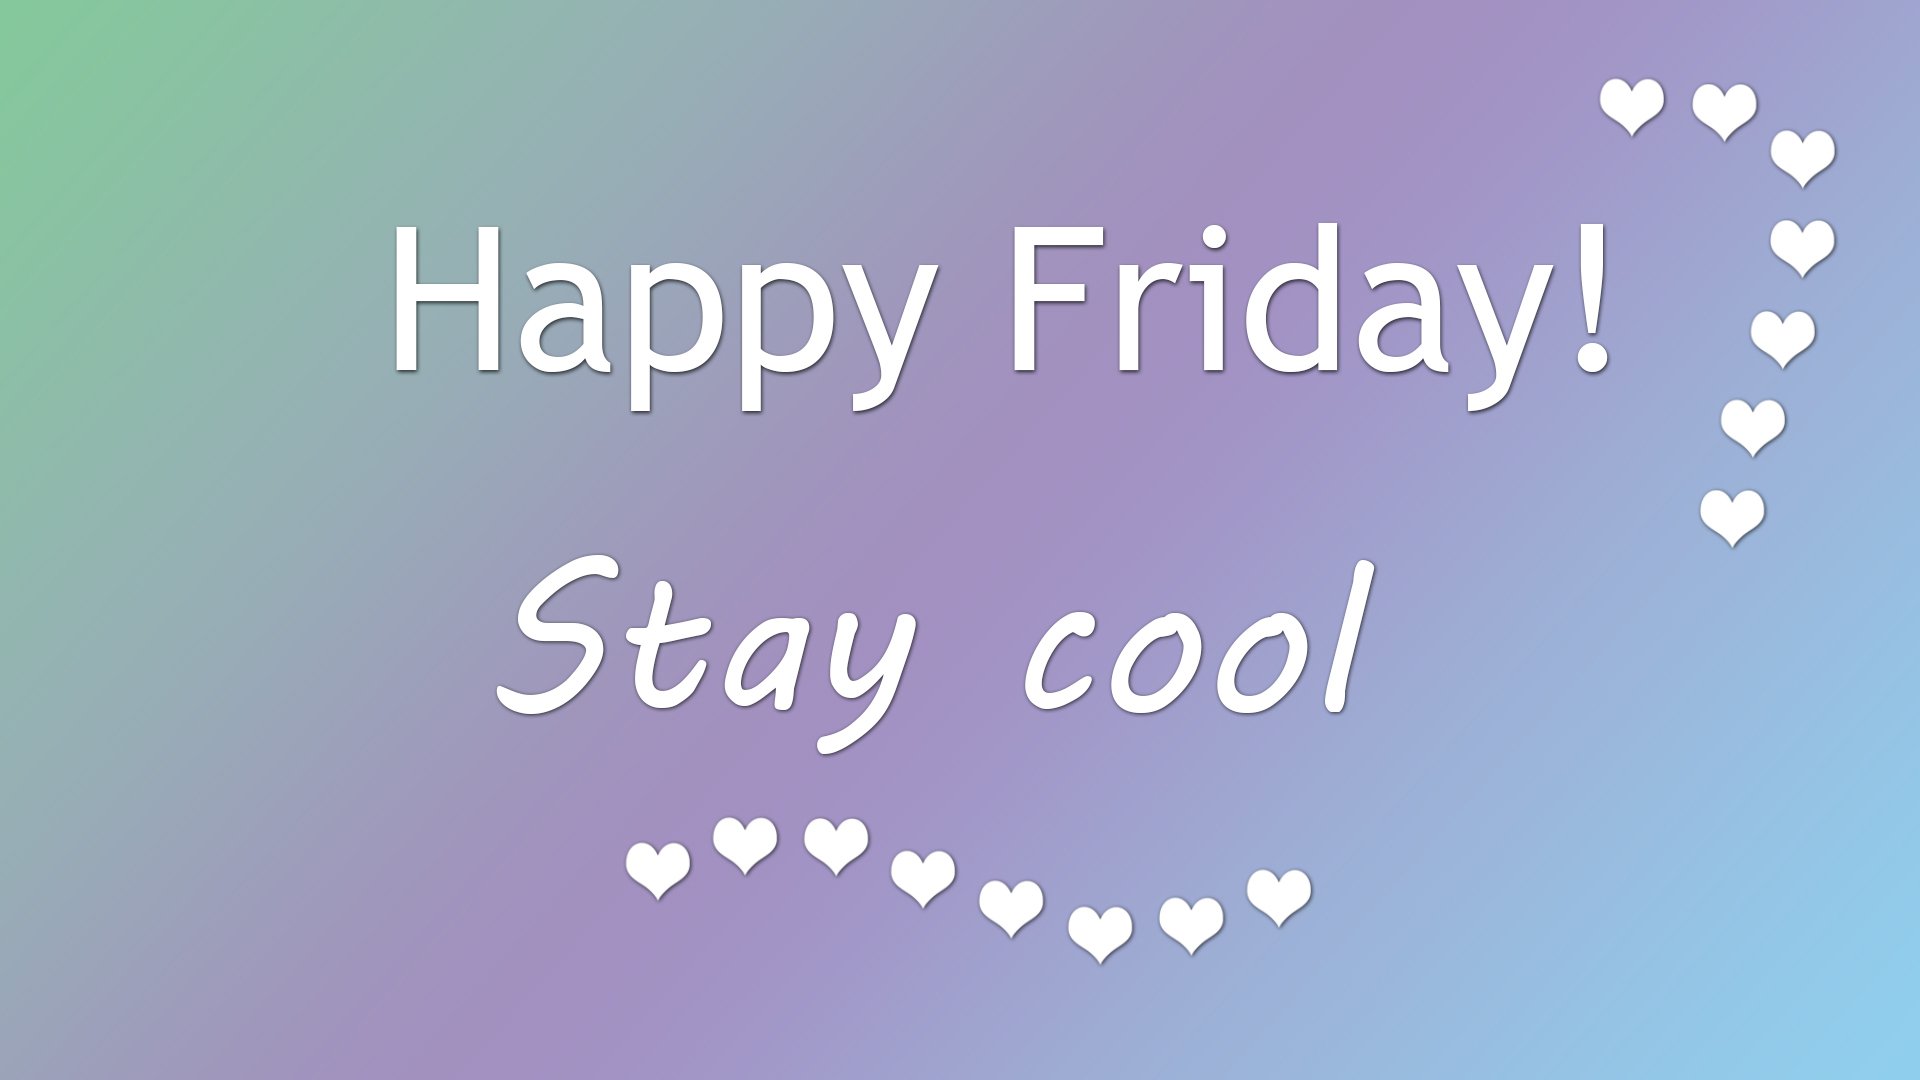 Happy Friday! by Mimosa